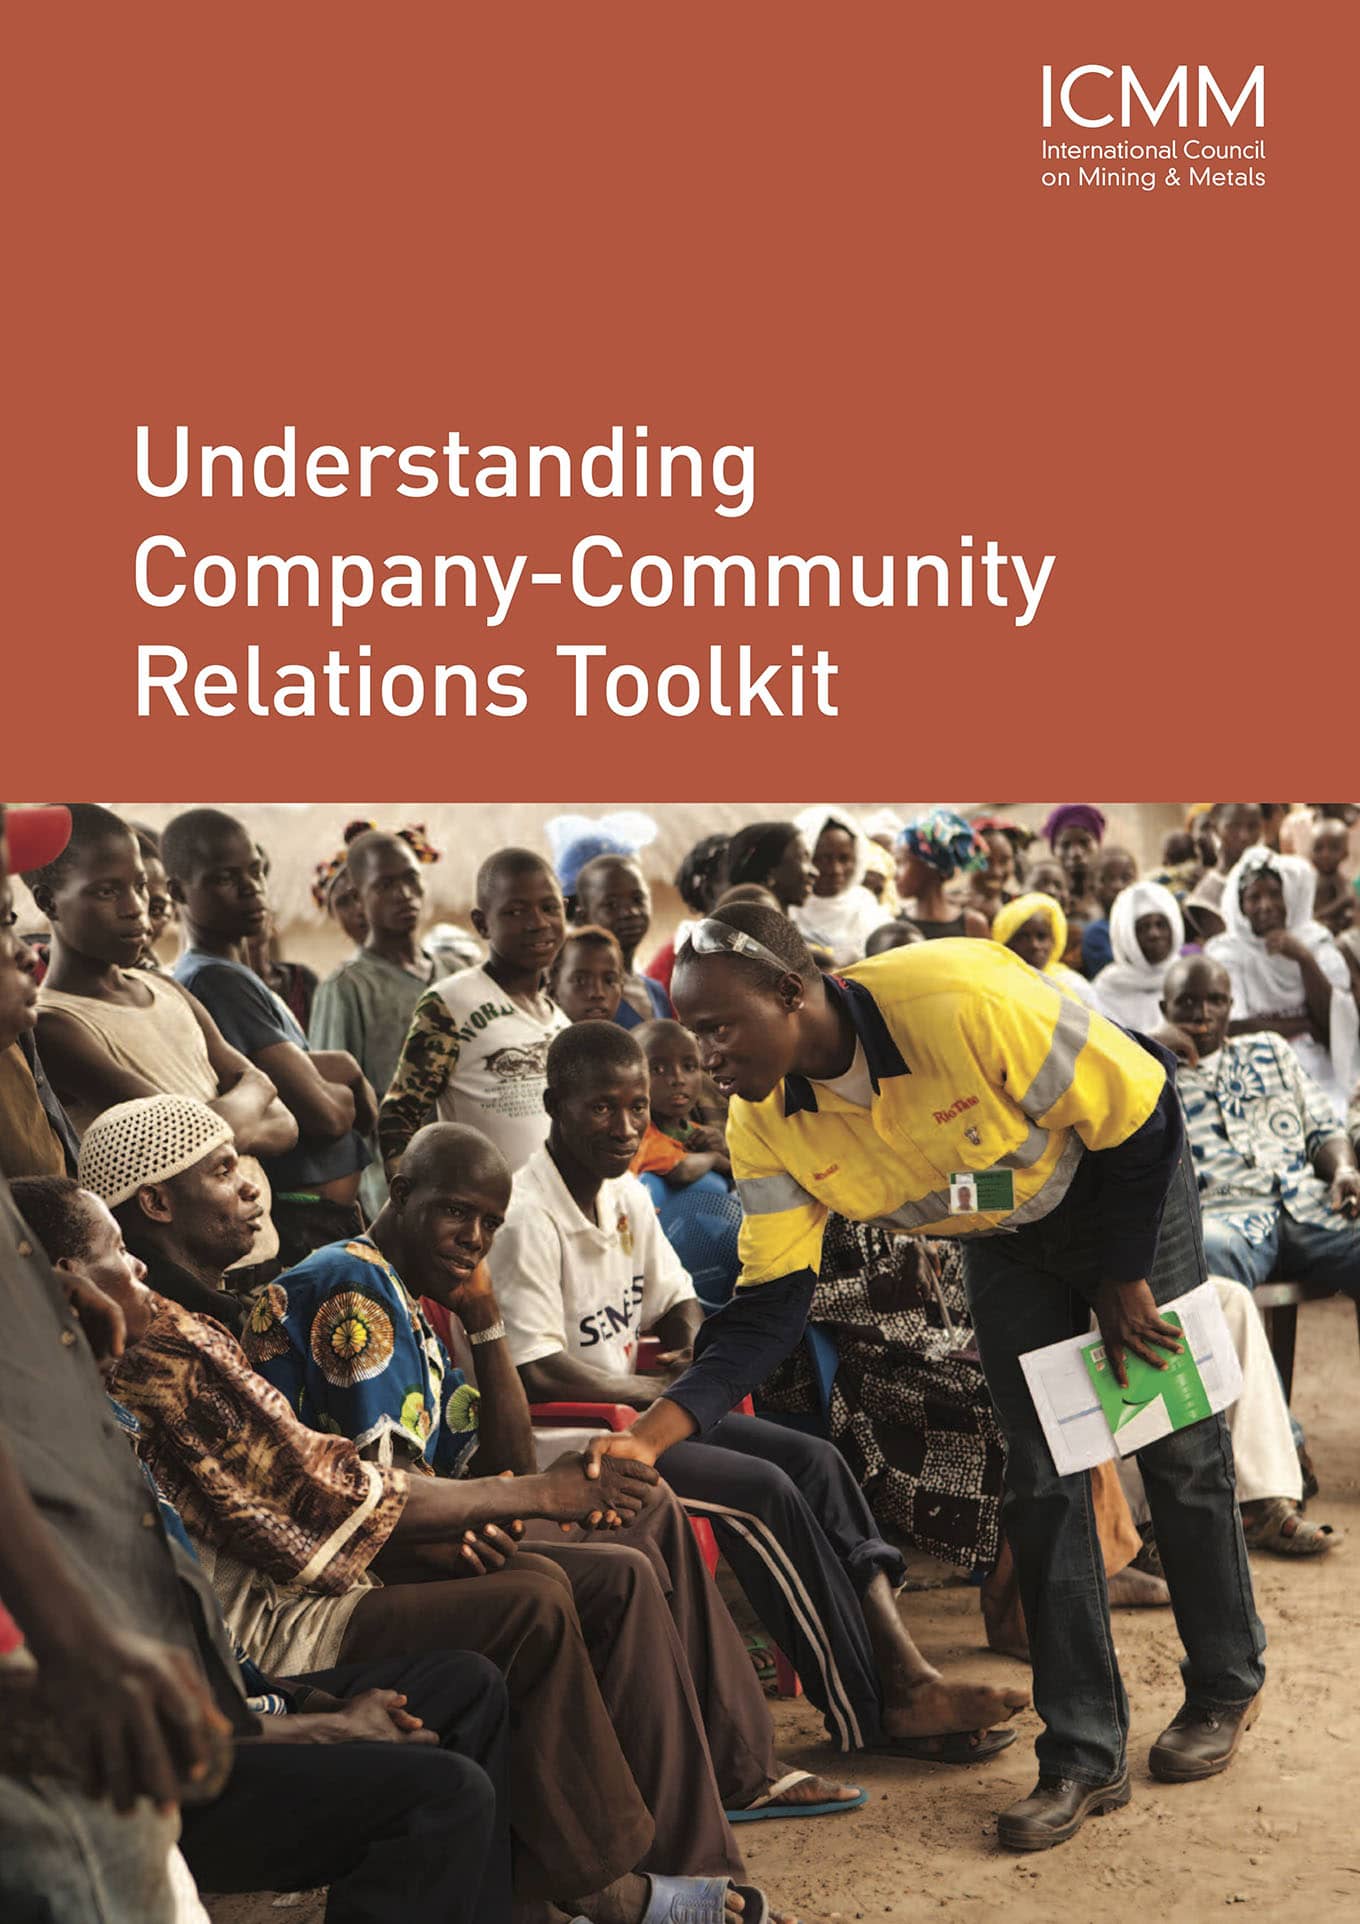 Understanding Company-Community Relations Toolkit (ICMM, 2015)